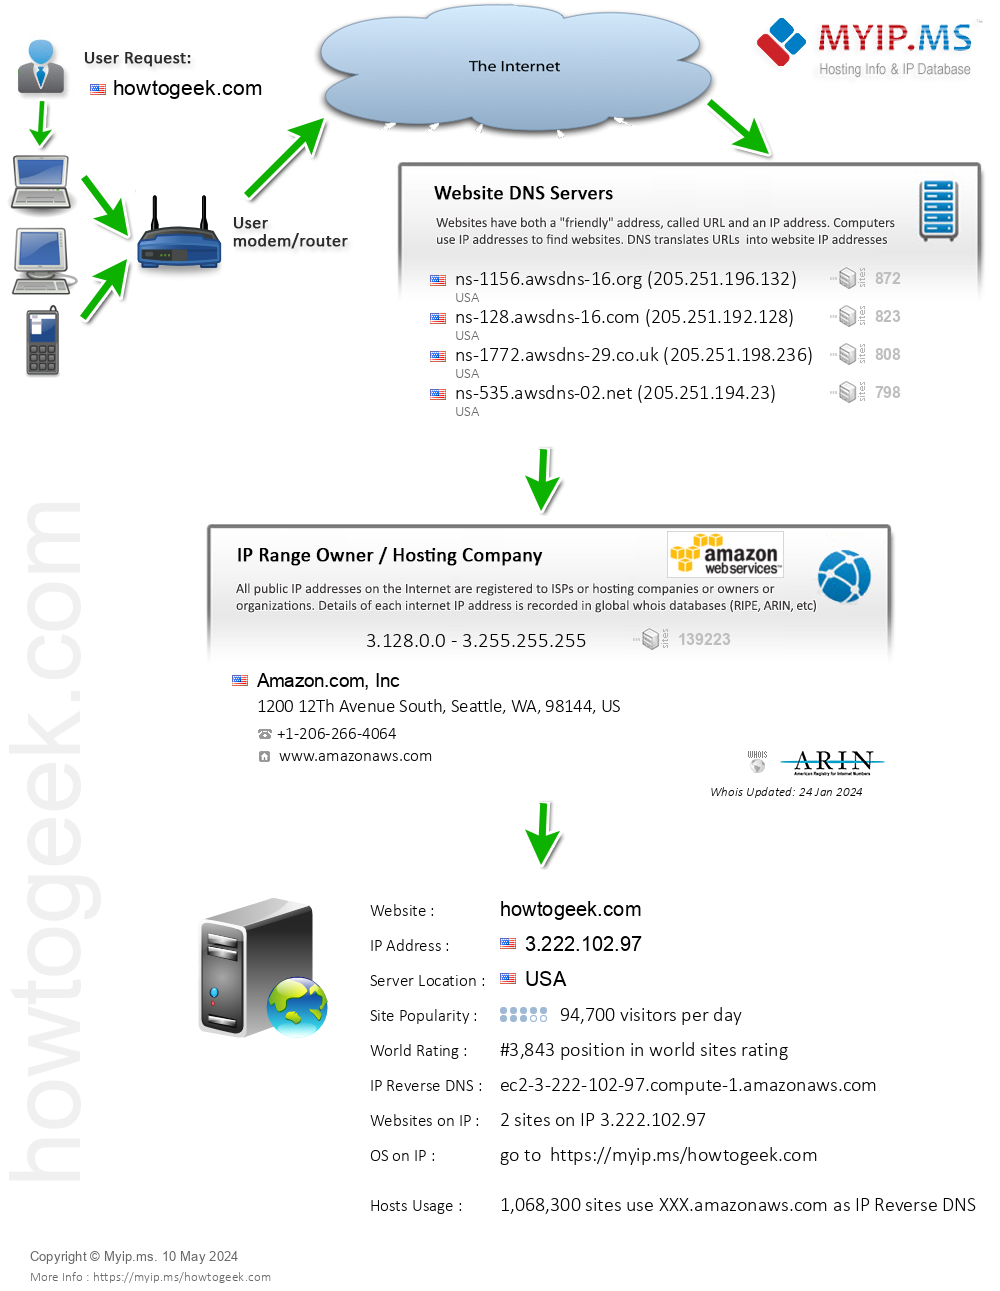 Howtogeek.com - Website Hosting Visual IP Diagram